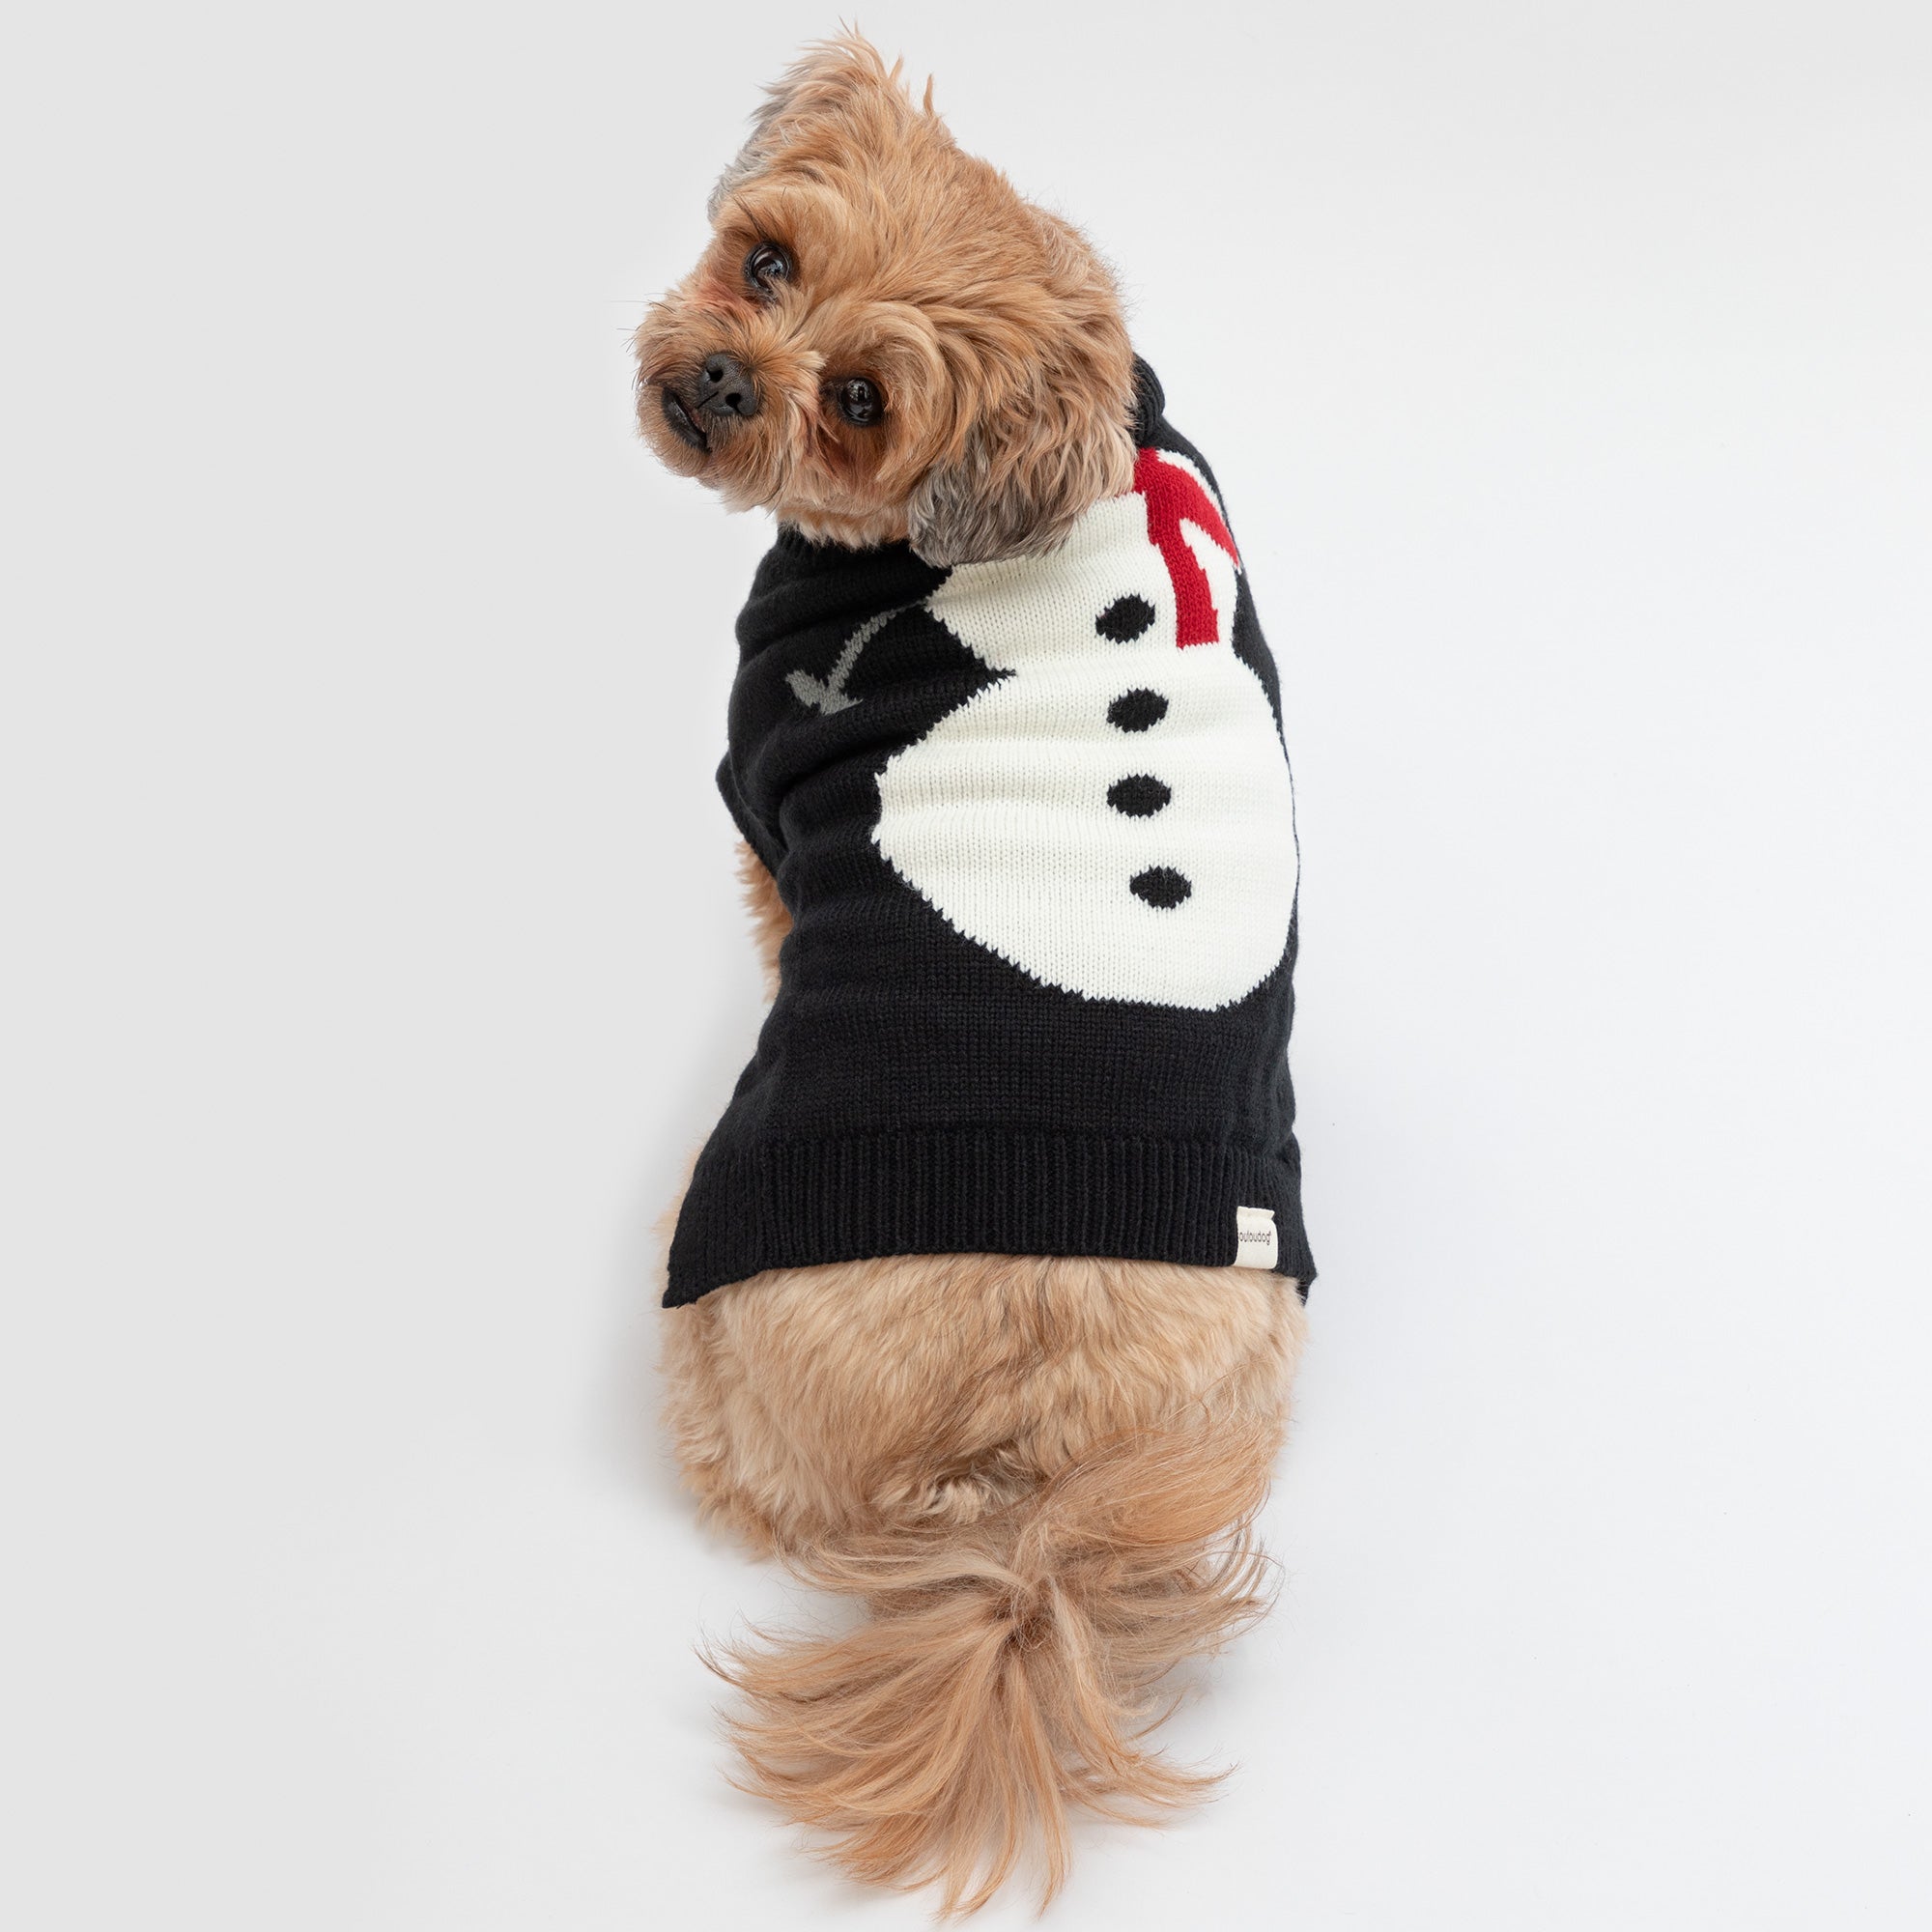 Cozy Christmas Pet Sweater - Snowman - S